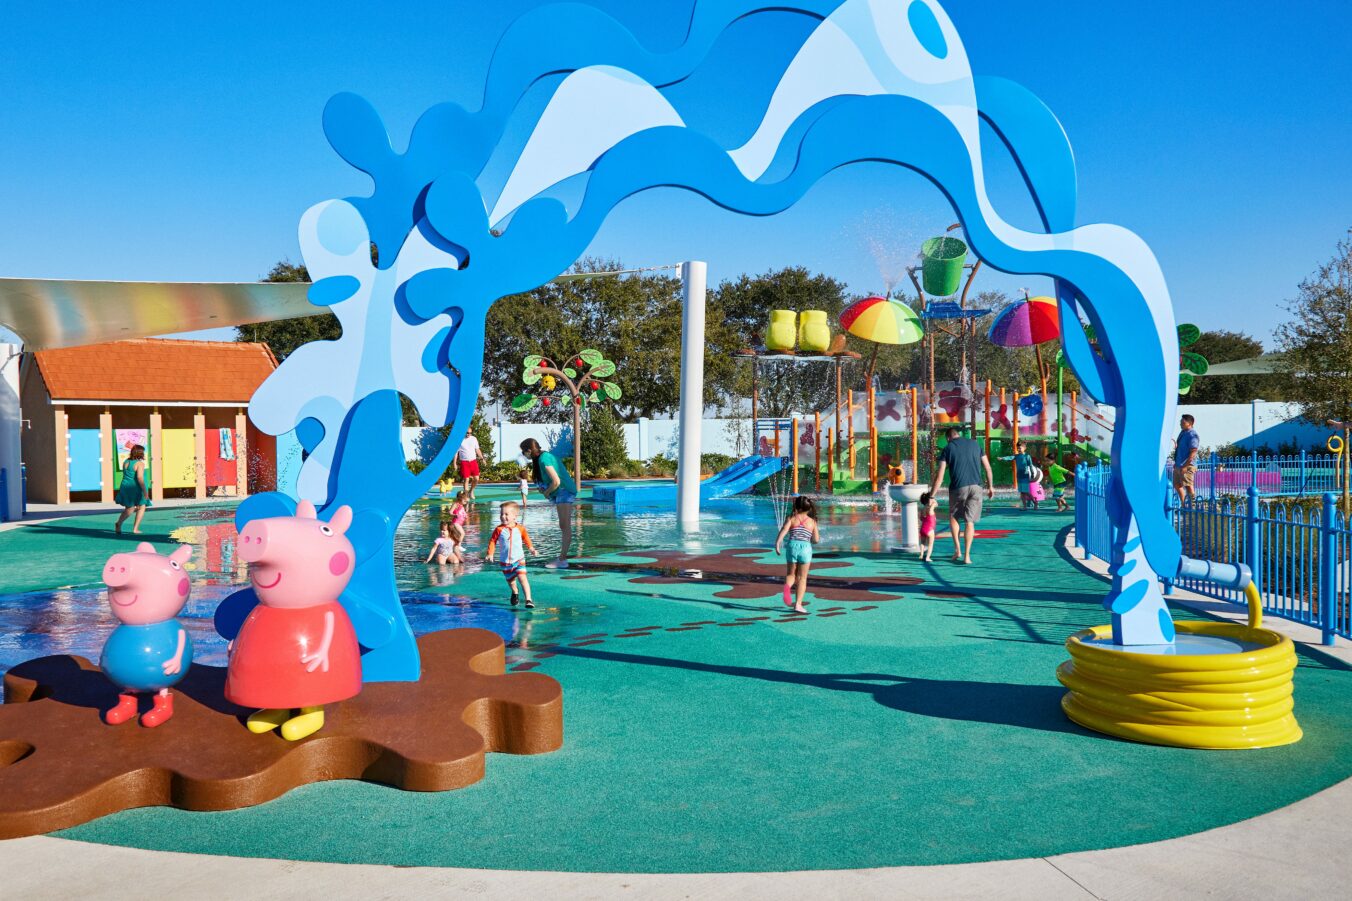 Kids splash at the colorful splash pad and water slides